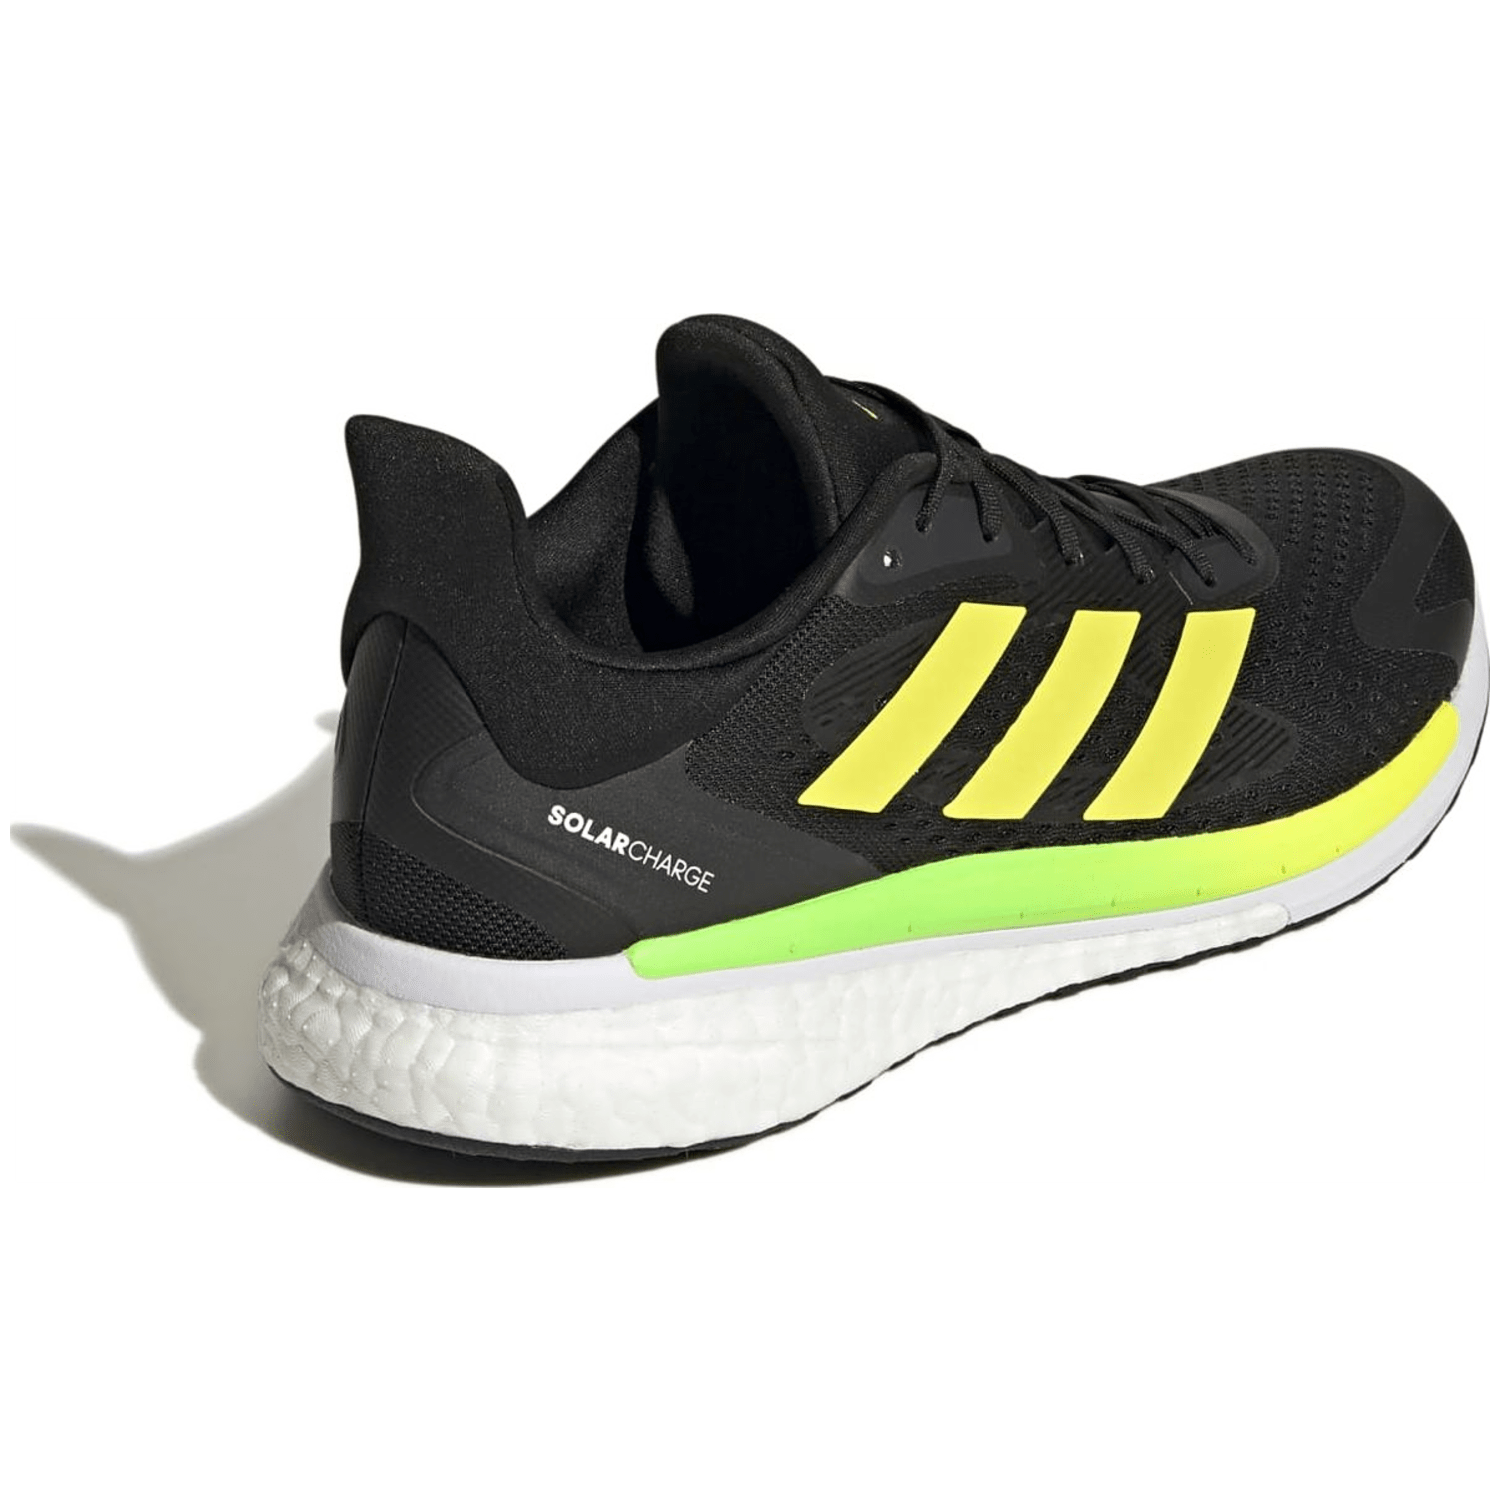 Adidas Solarcharge Laufschuh Herren